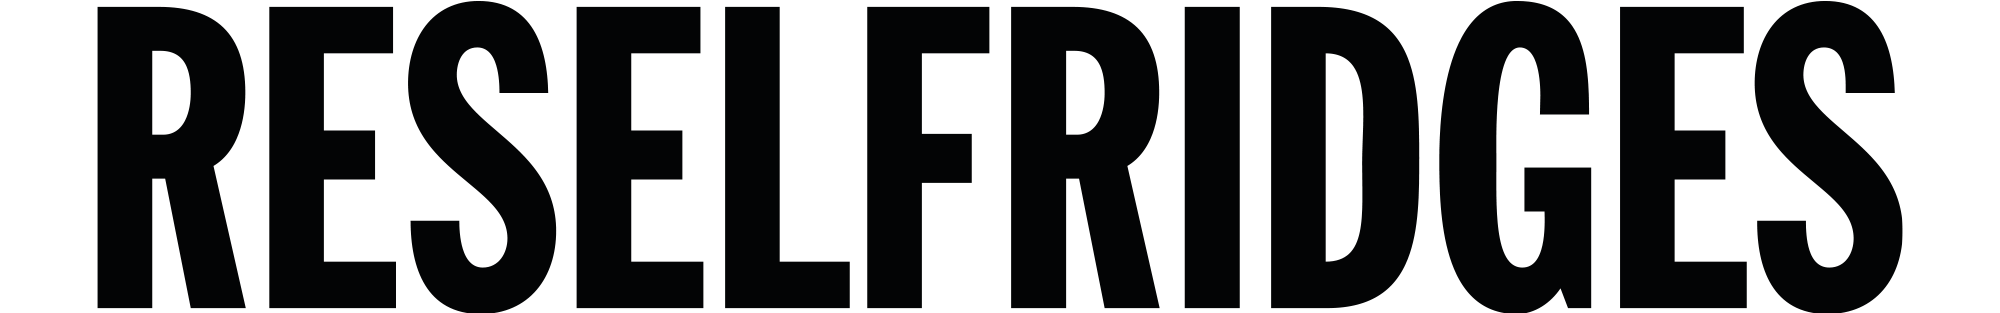 RESELFRIDGES logo